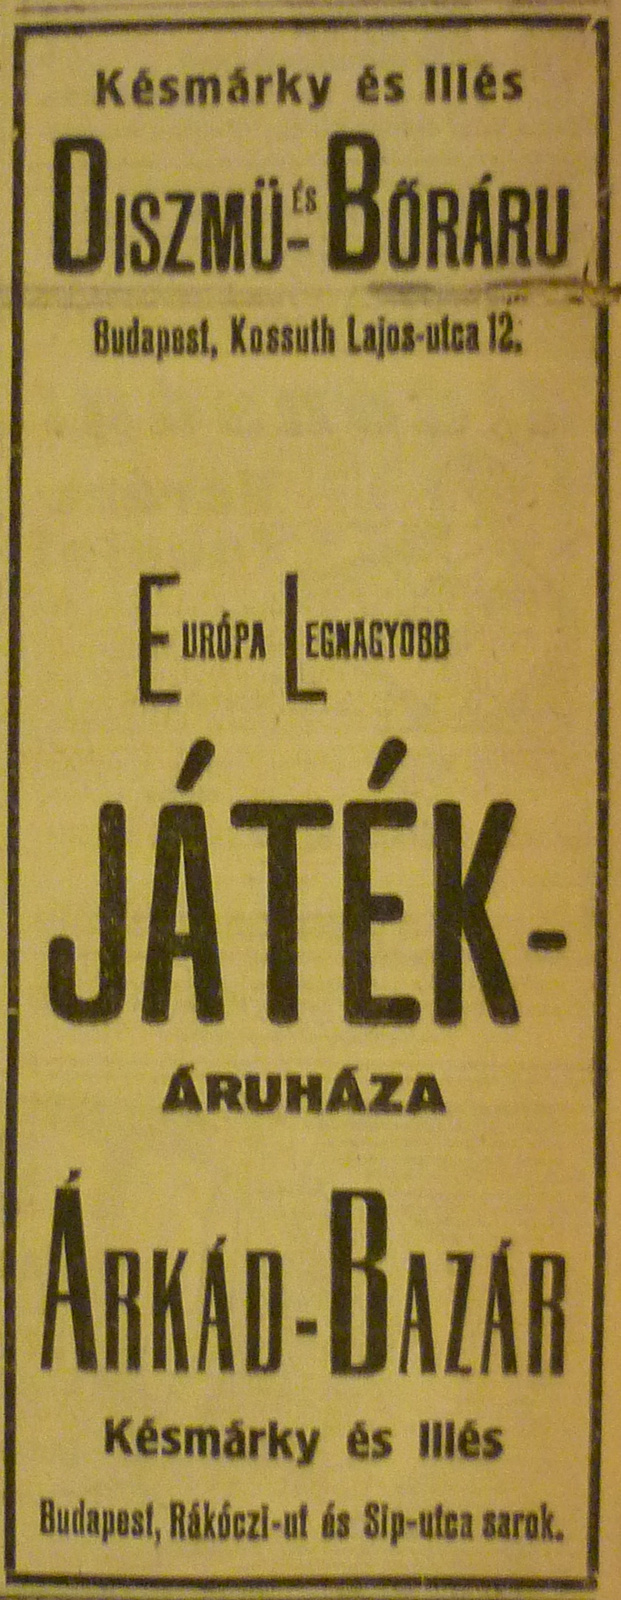 NepszavaHirdetesek-191212-10